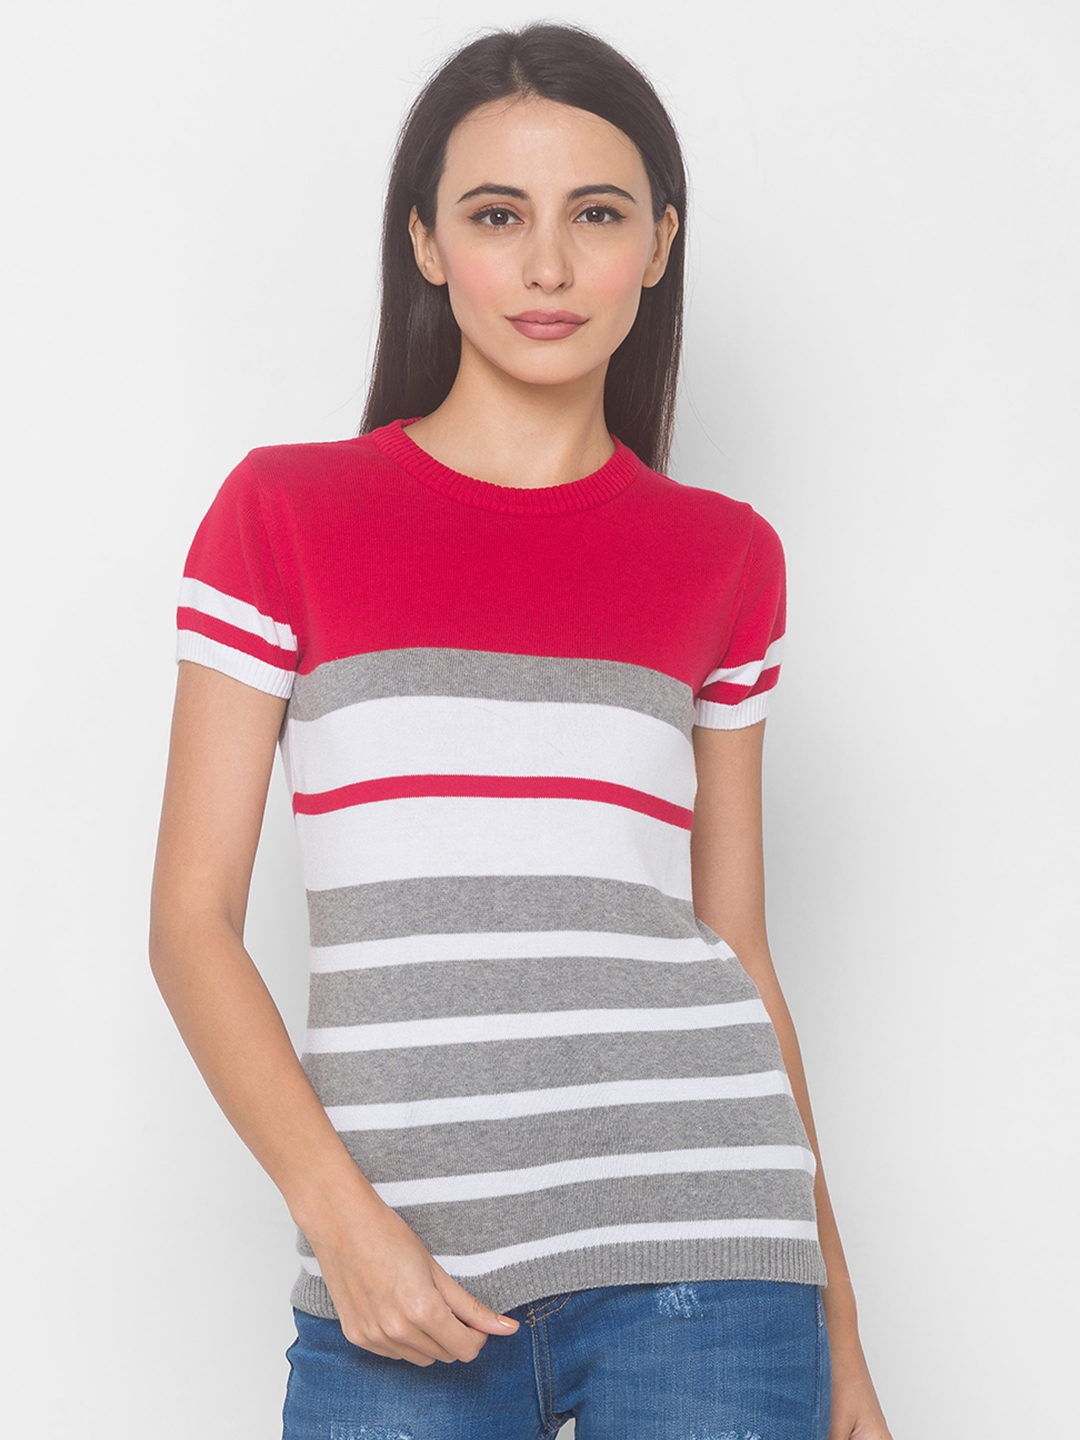 globus | Red Striped Sweatshirt